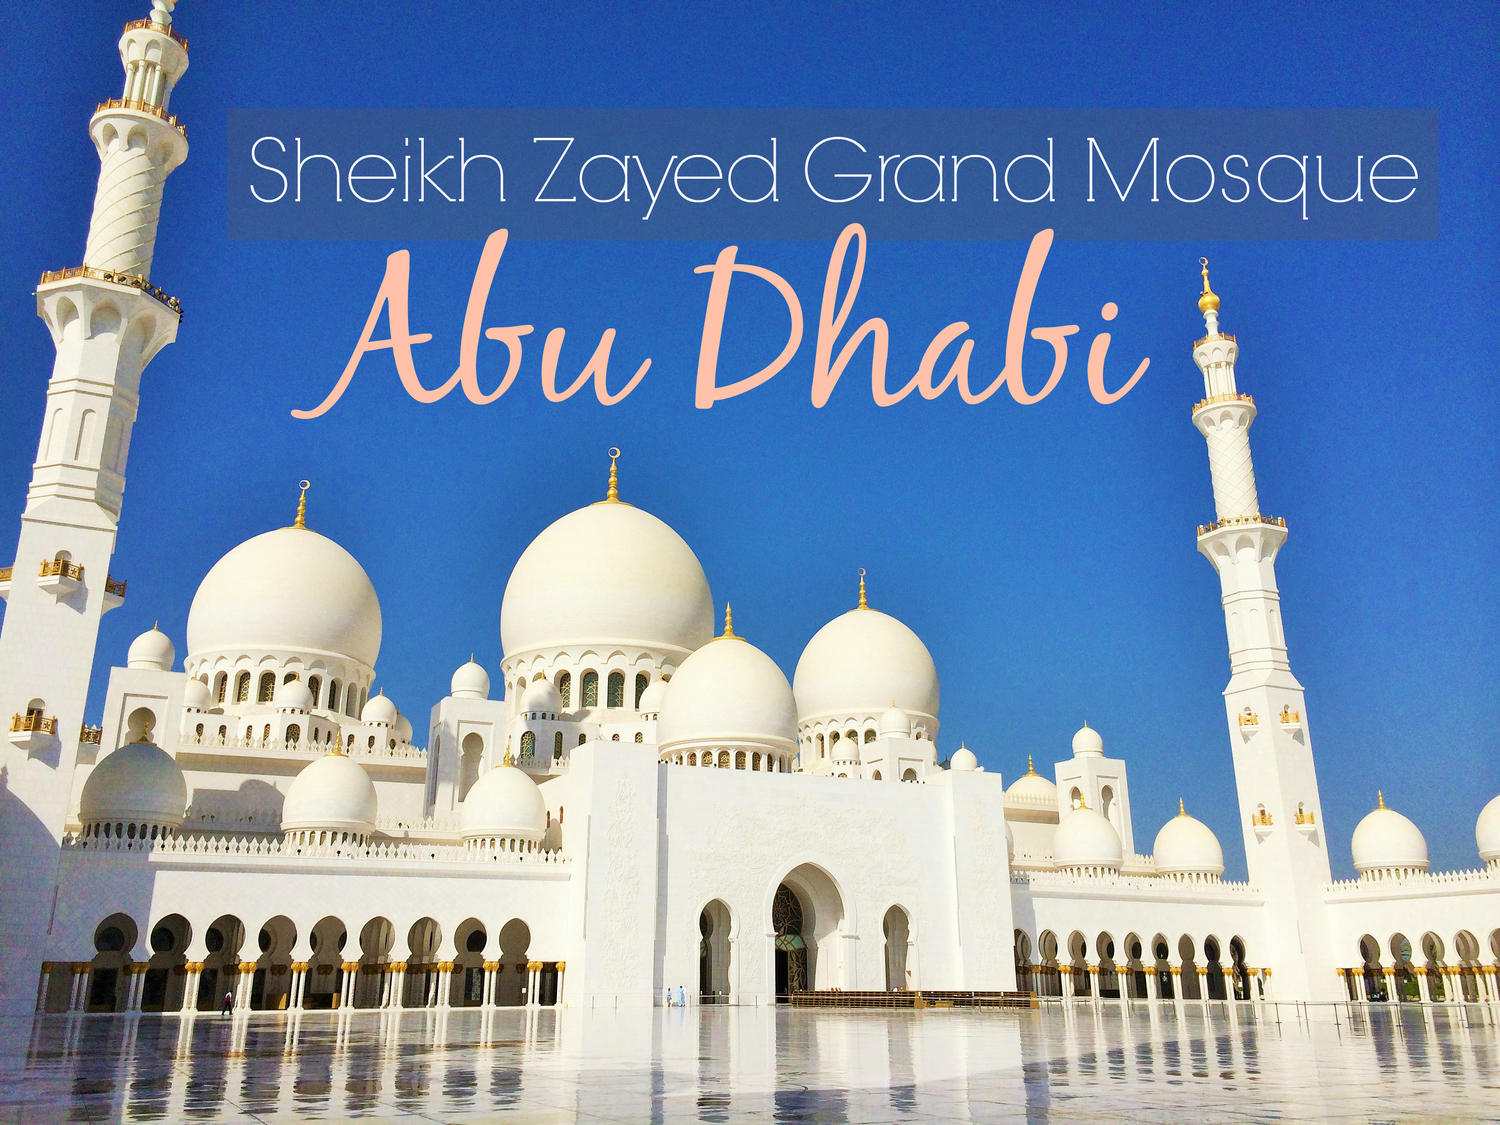 Sheikh Zayed Grand Mosque - Abu Dhabi — Metanoia Living